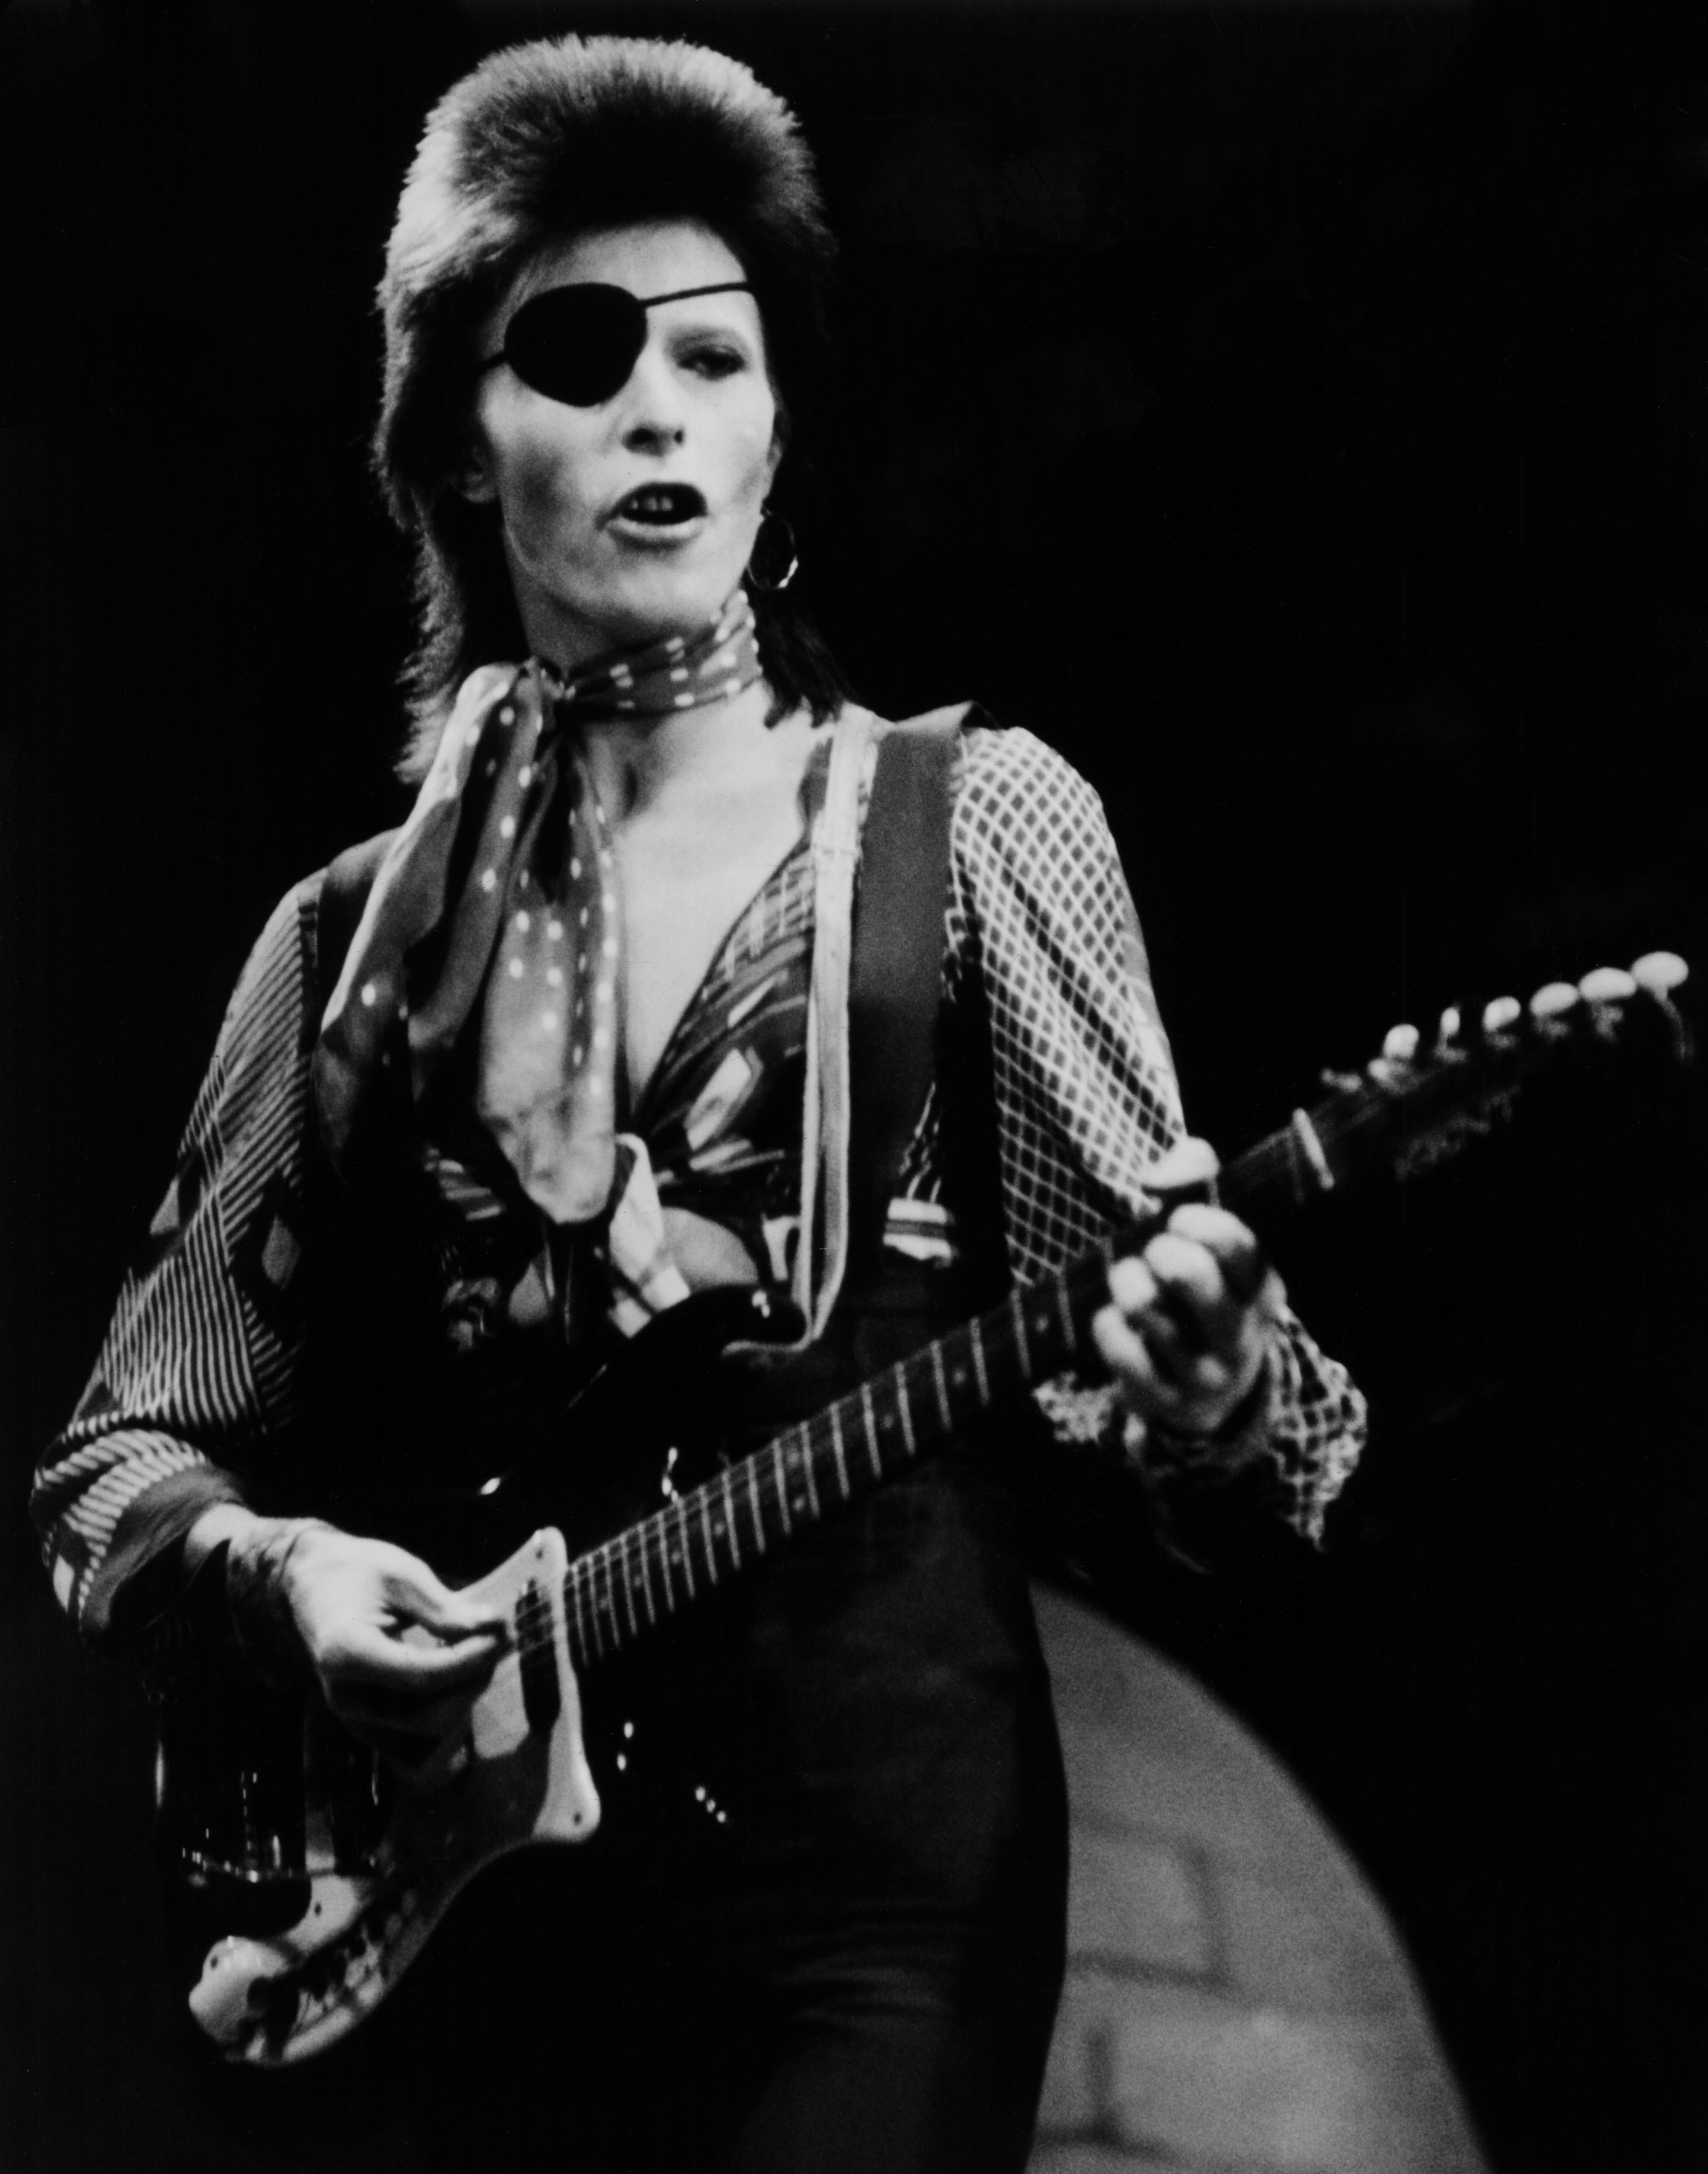 Unknown Black and White Photograph - David Bowie "Ziggie Stardust" Performing Globe Photos Fine Art Print